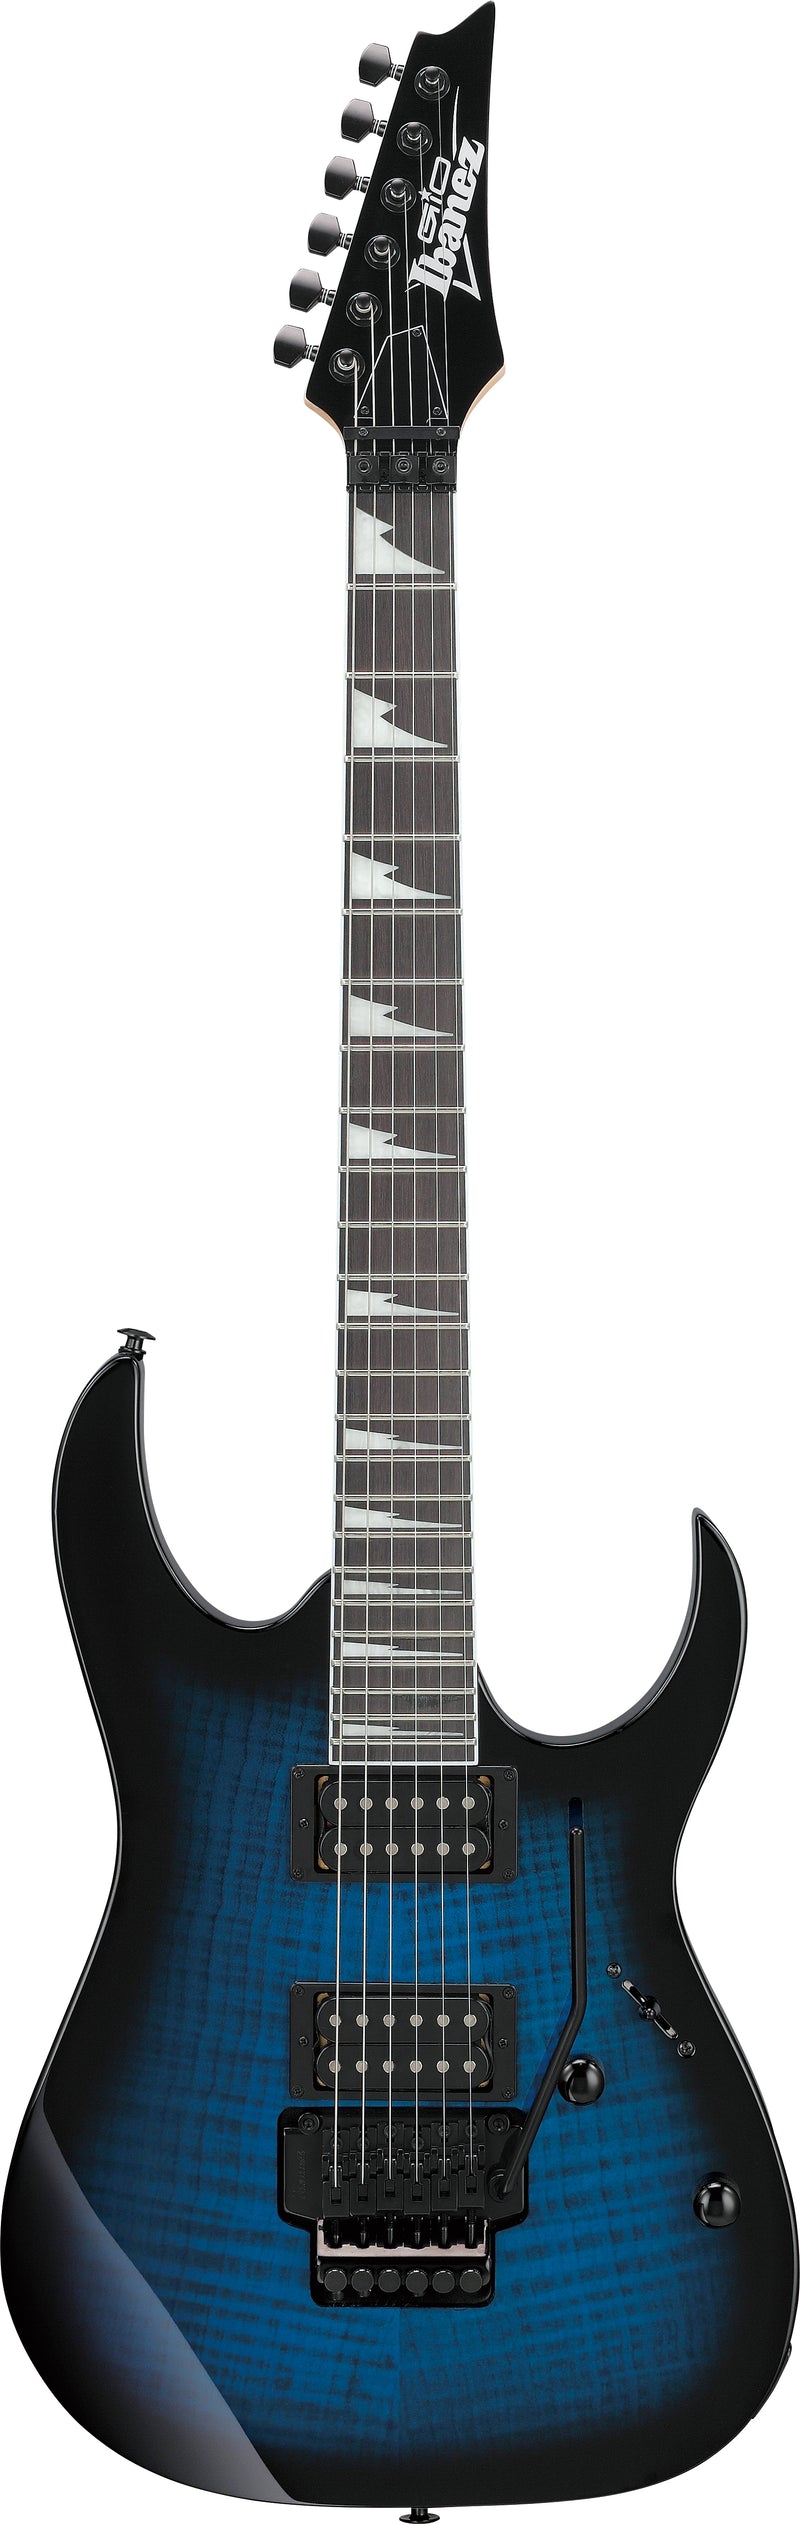 Ibanez GIO RG Series Electric Guitar (Transparent Blue Sunburst)